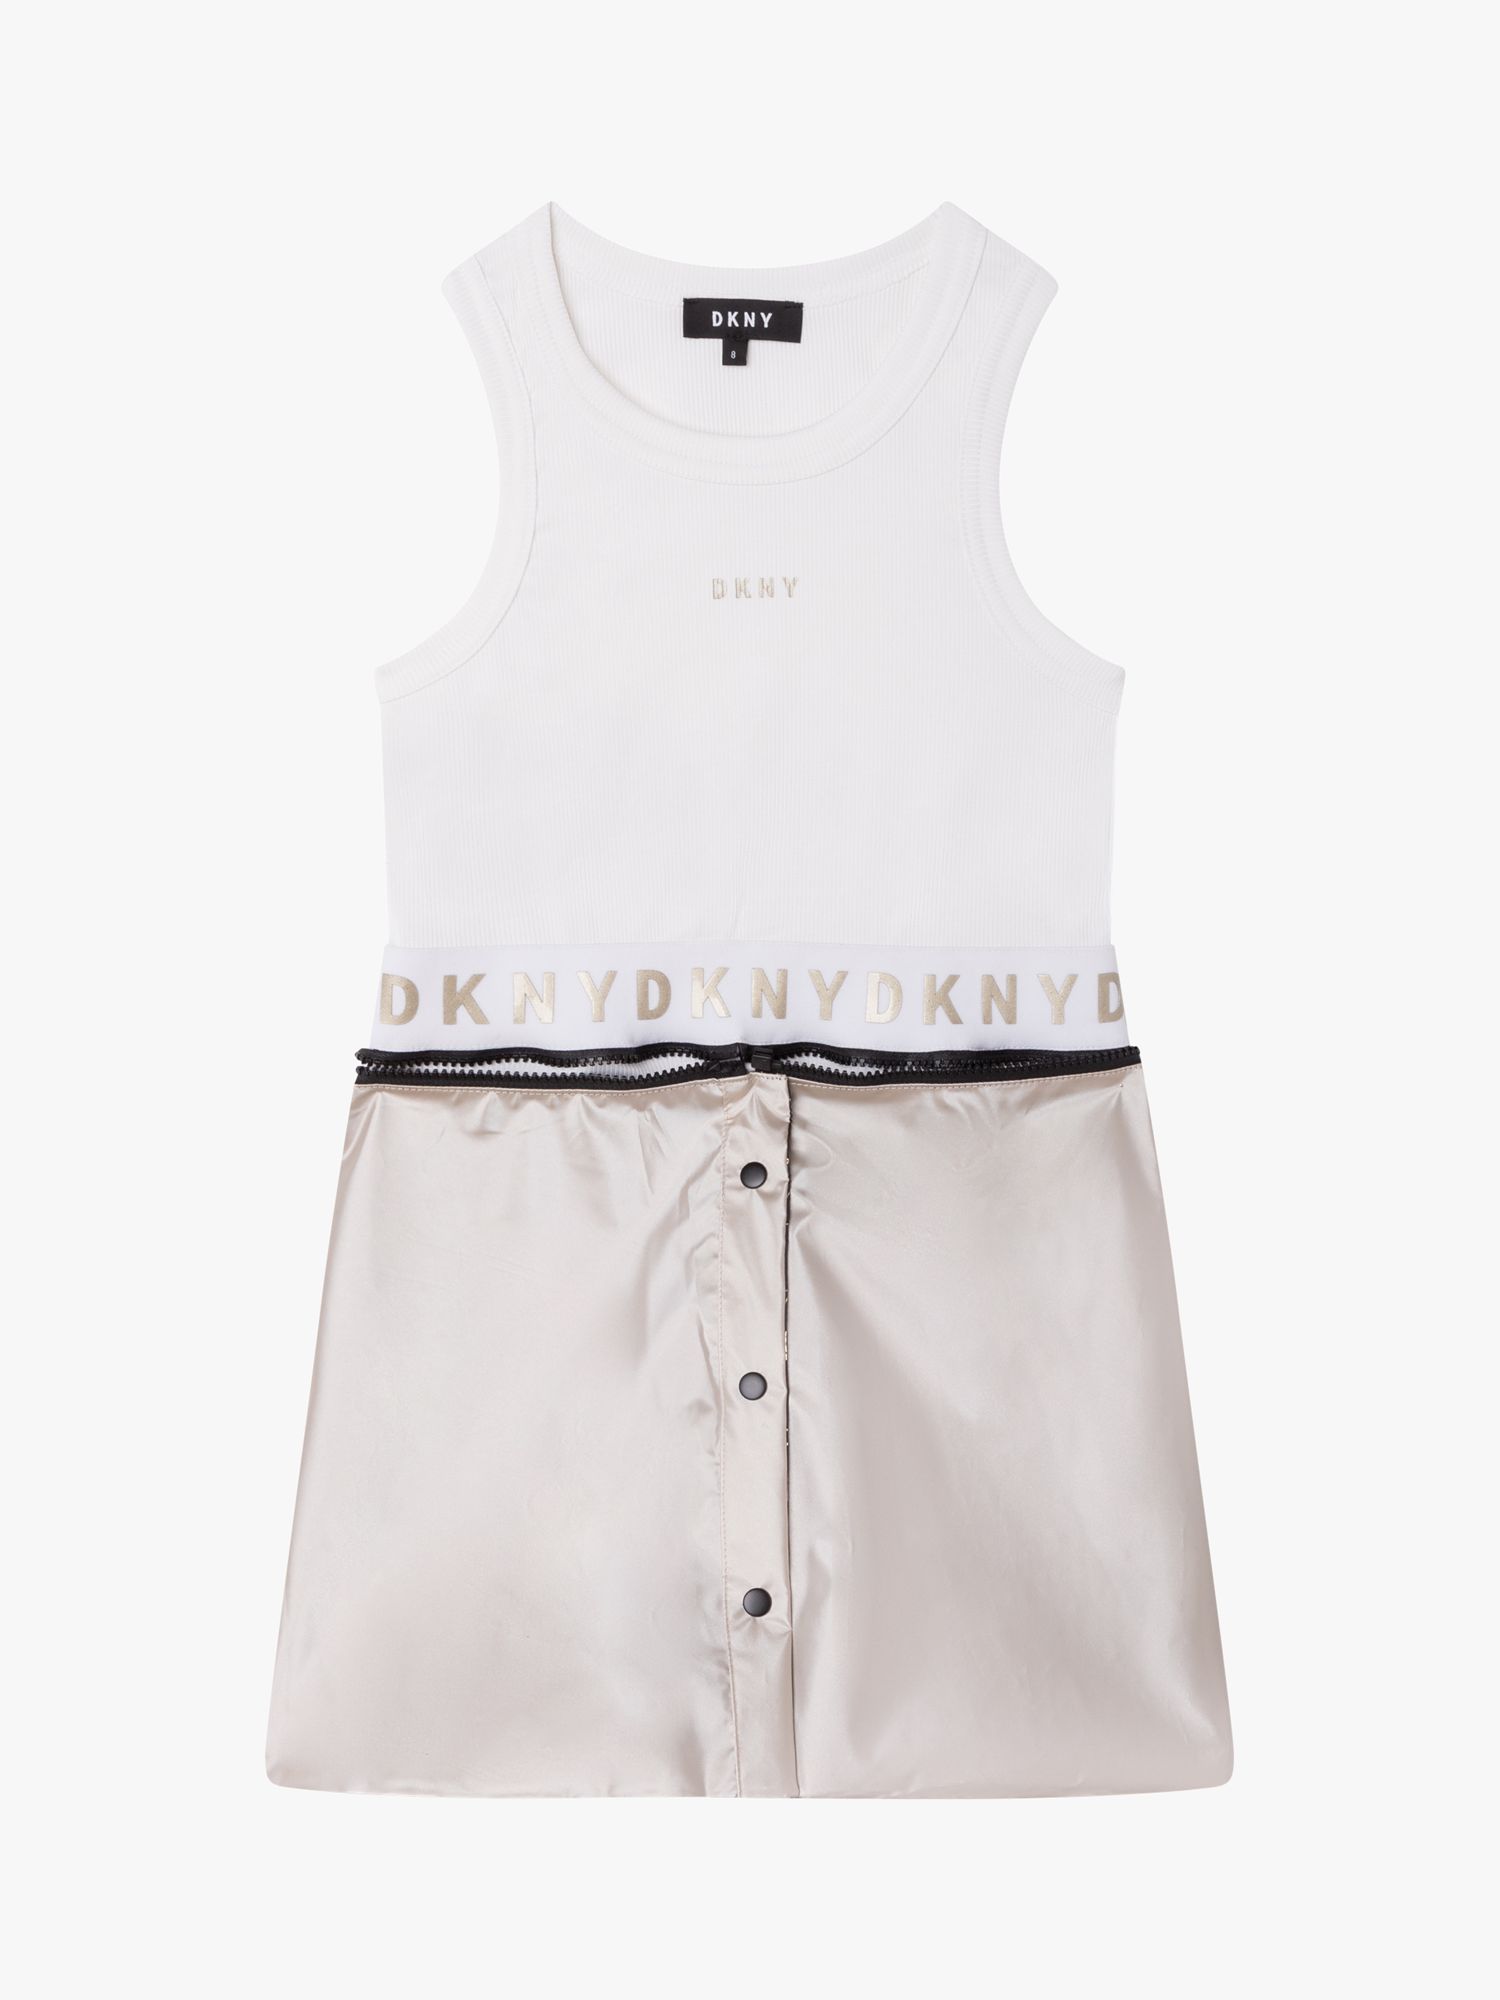 DKNY Kids' Colour Block Tank Top Dress, White/Multi, 4 years